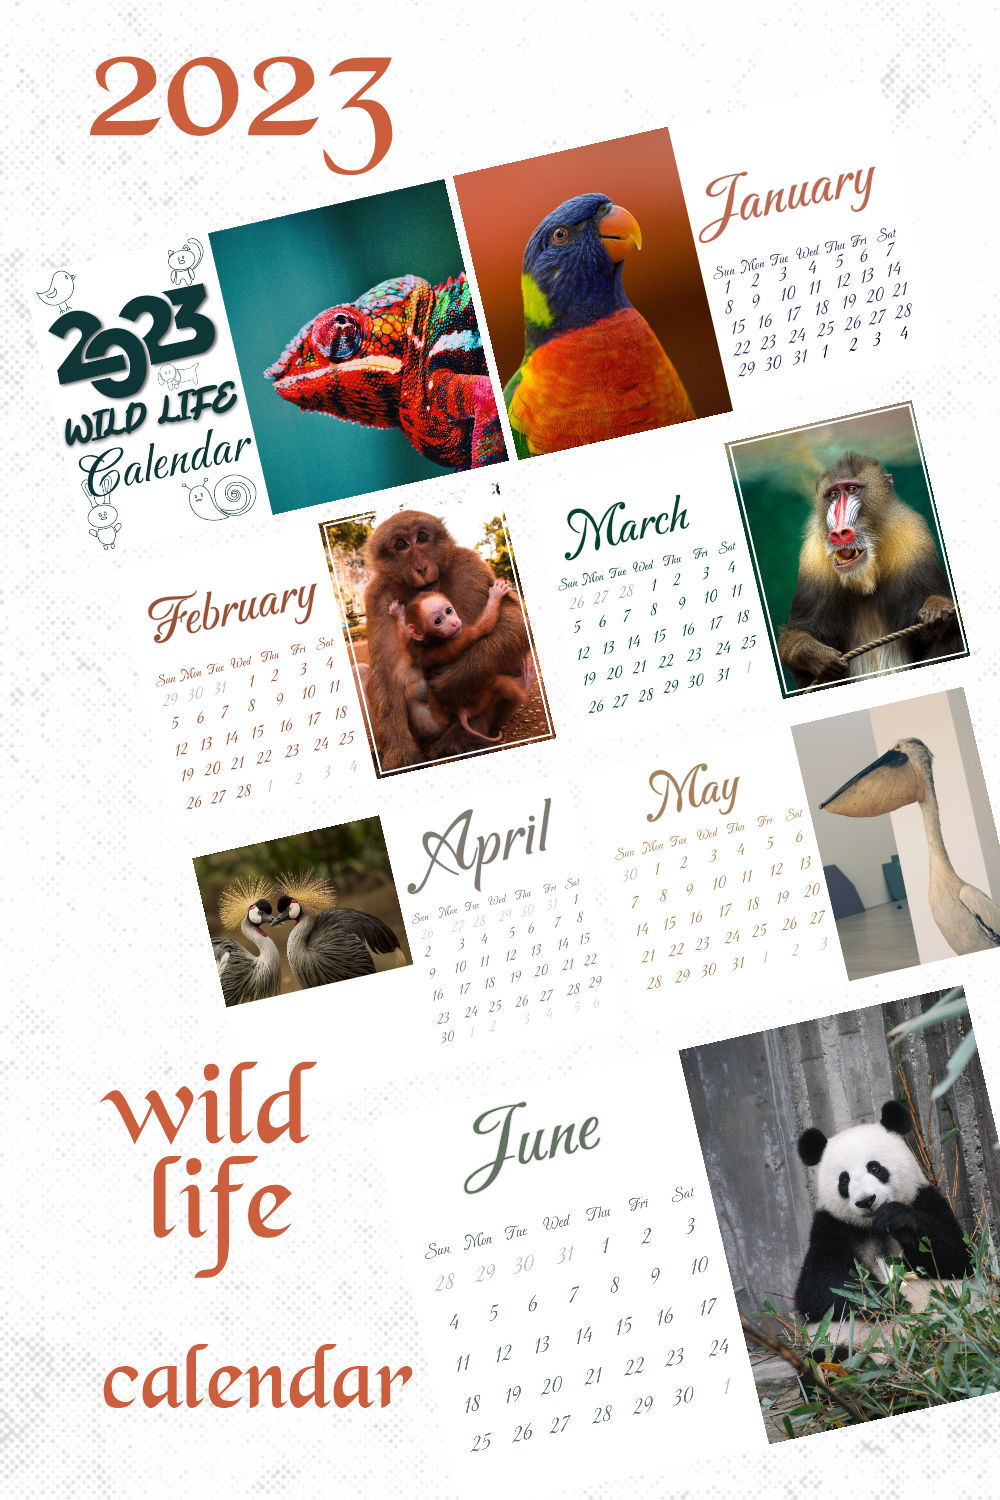 2023 Wild Life Calendar pinterest preview image.